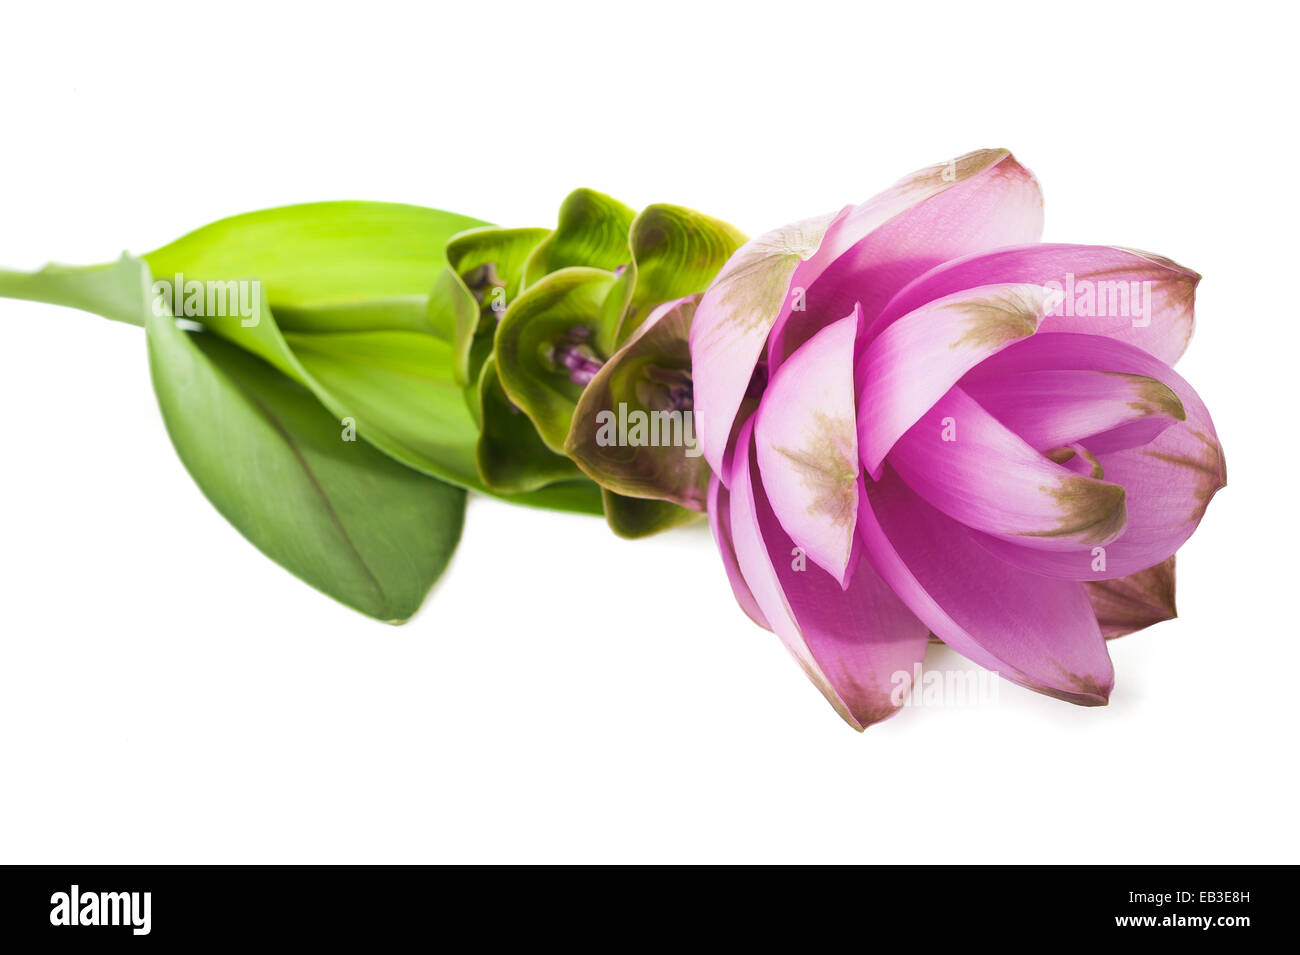 Siam tulip or Curcuma flower isolated on white background Stock Photo